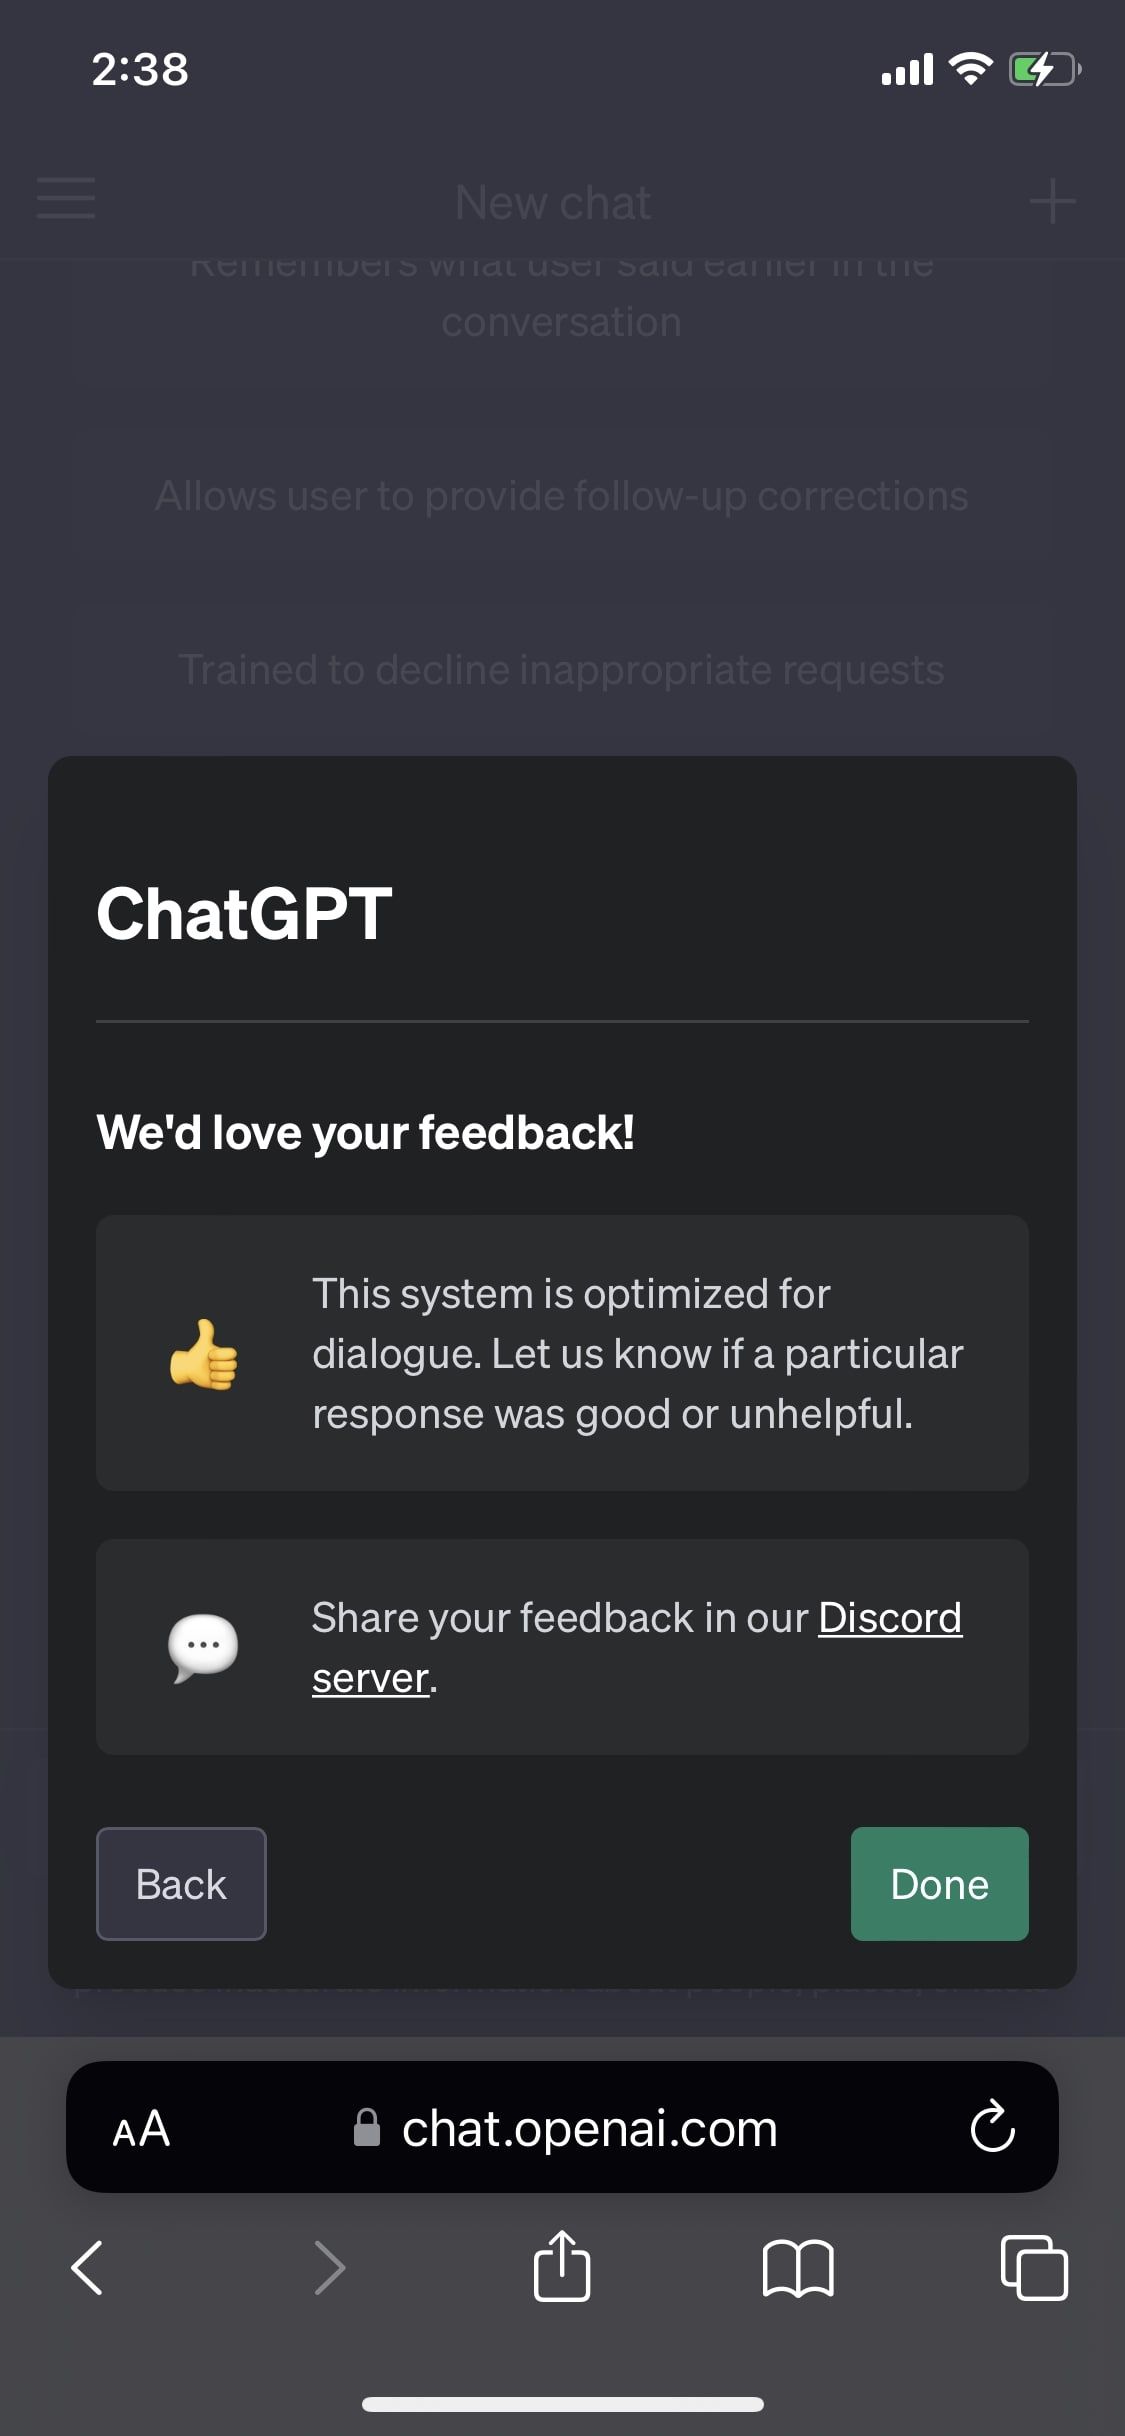 ChatGPT final disclaimer screen iOS